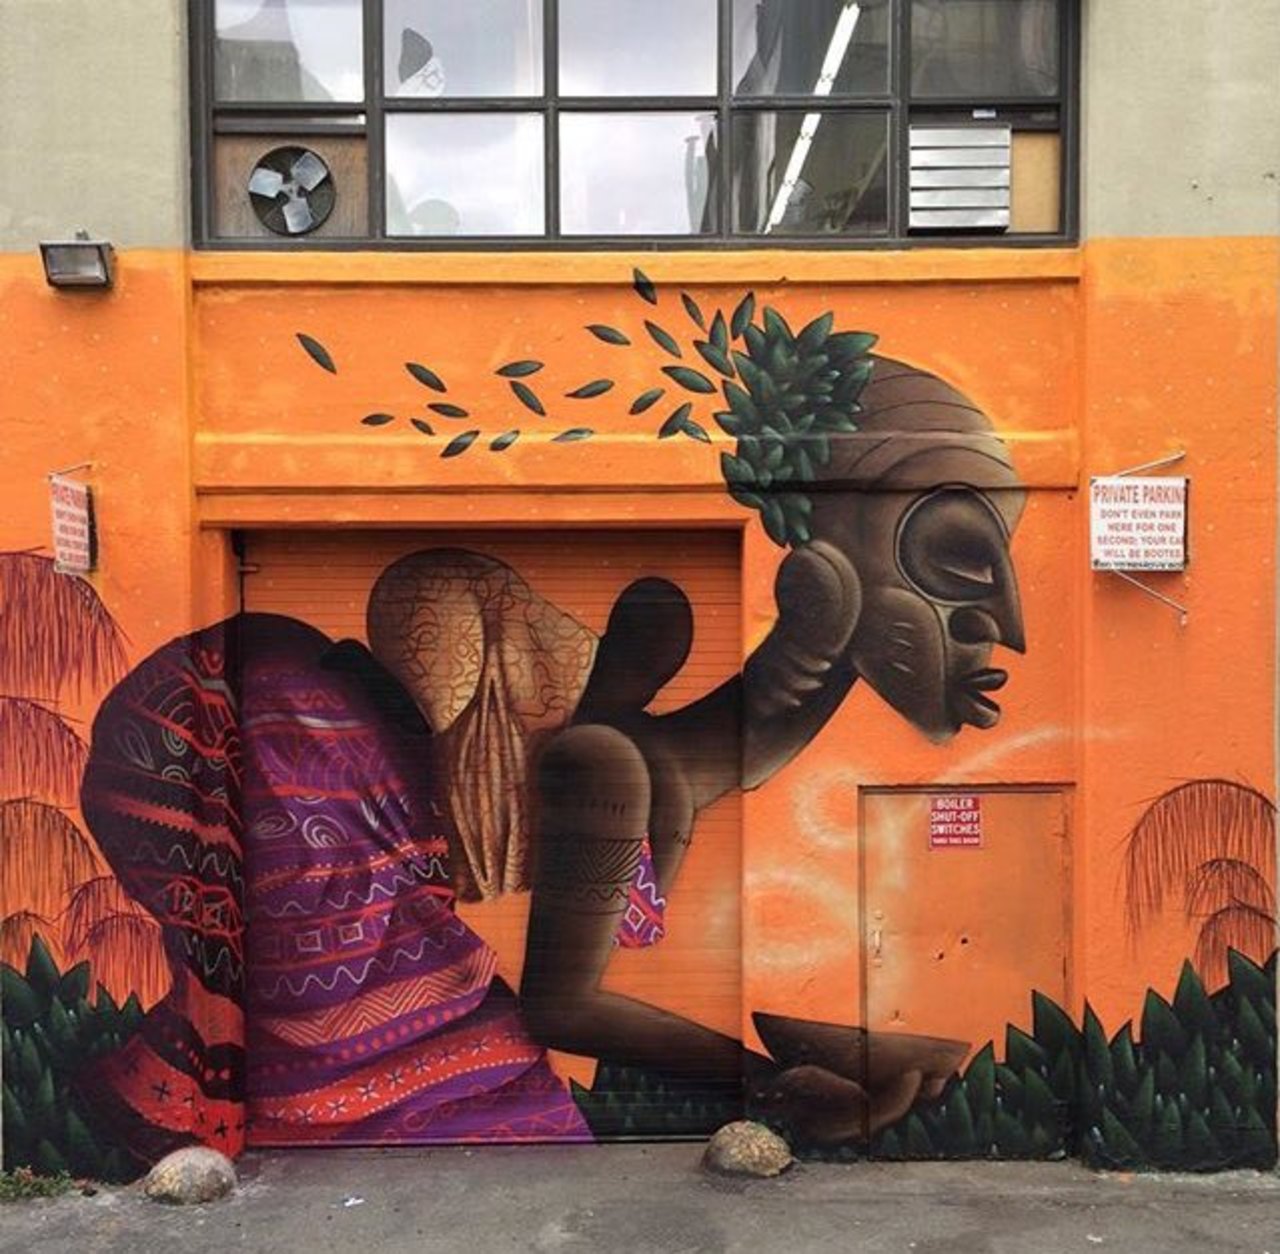 New Street Art by Alexandre Keto in NYC 

#art #graffiti #mural #streetart https://t.co/a7Jkyh1xO8